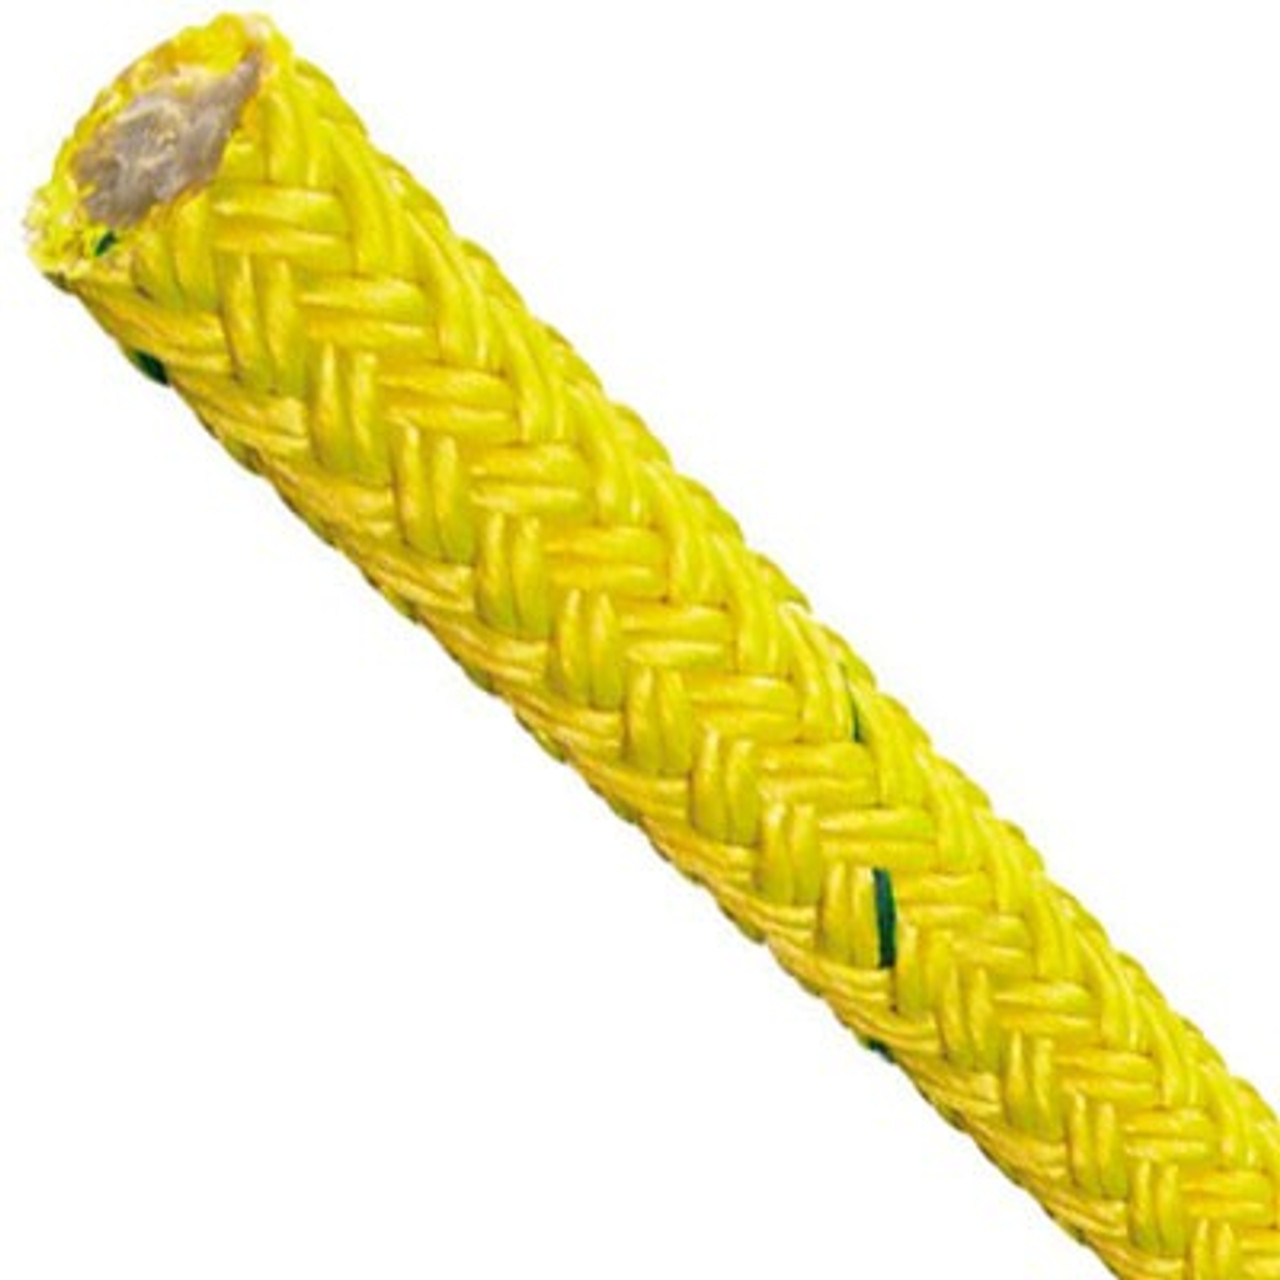 Samson Stable Braid 9/16 Rigging Rope